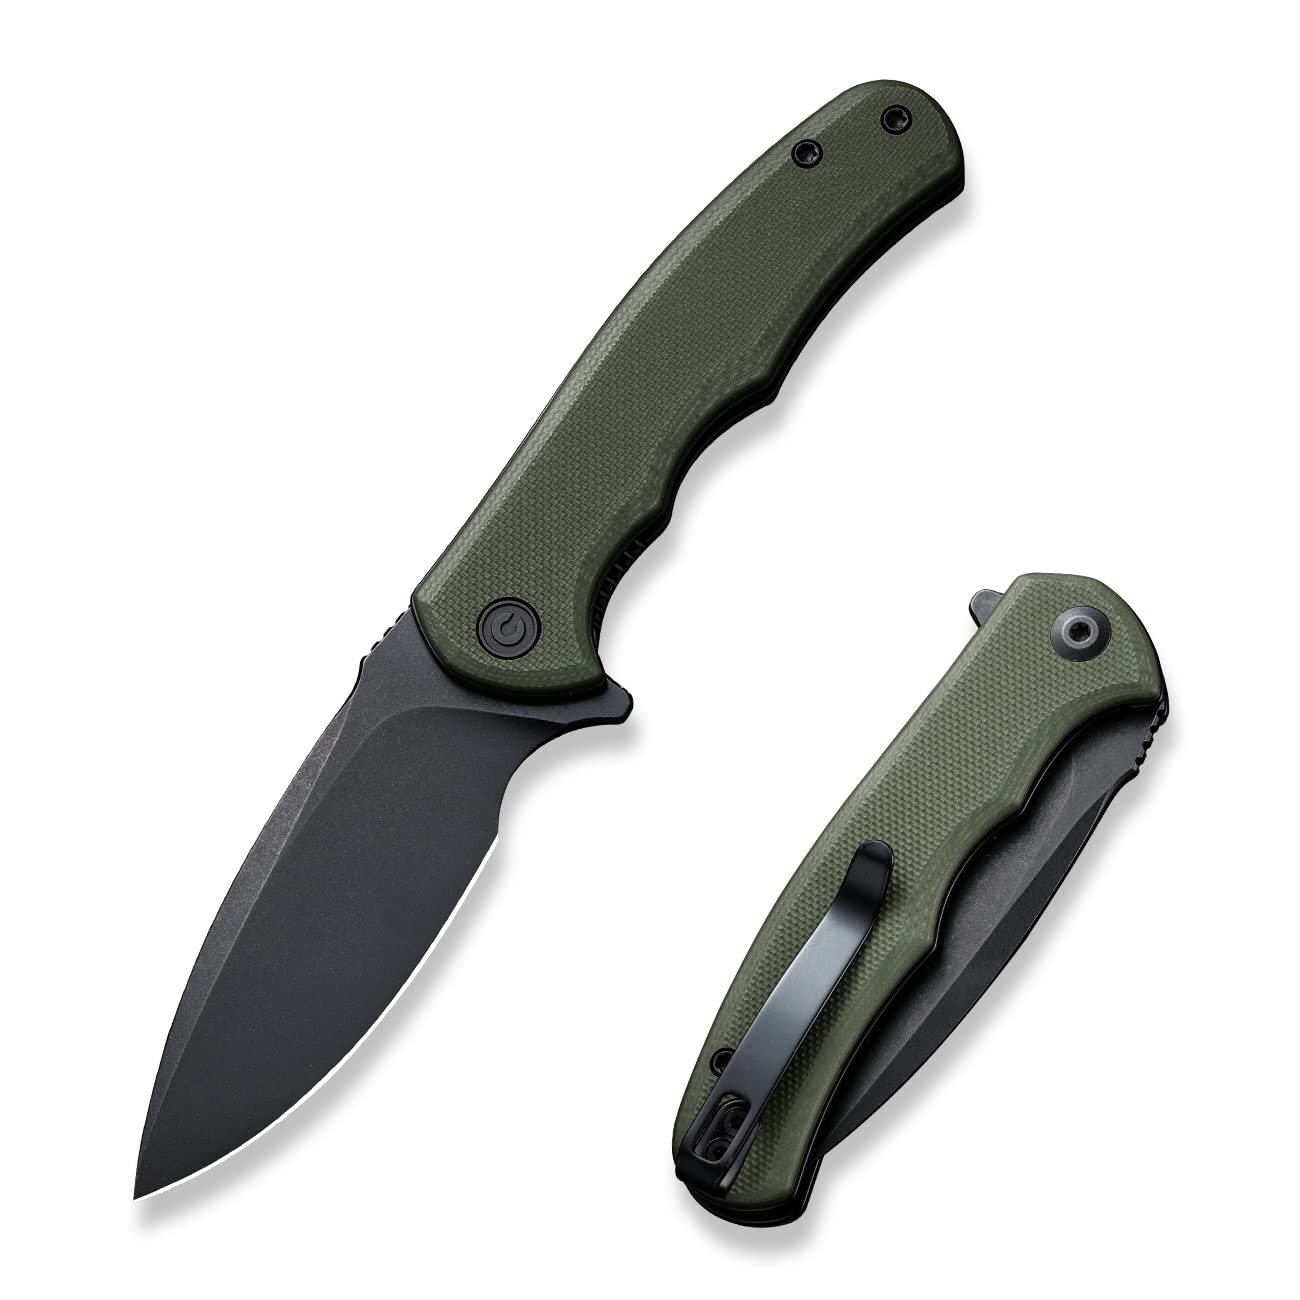 CIVIVI Mini Praxis Folding Pocket Knife, 2.98" D2 Steel Blade G10 Handle Small EDC Knife with Pocket Clip for Men Women, Sharp Camping Survival Hiking Knives C18026C-1 $26.25